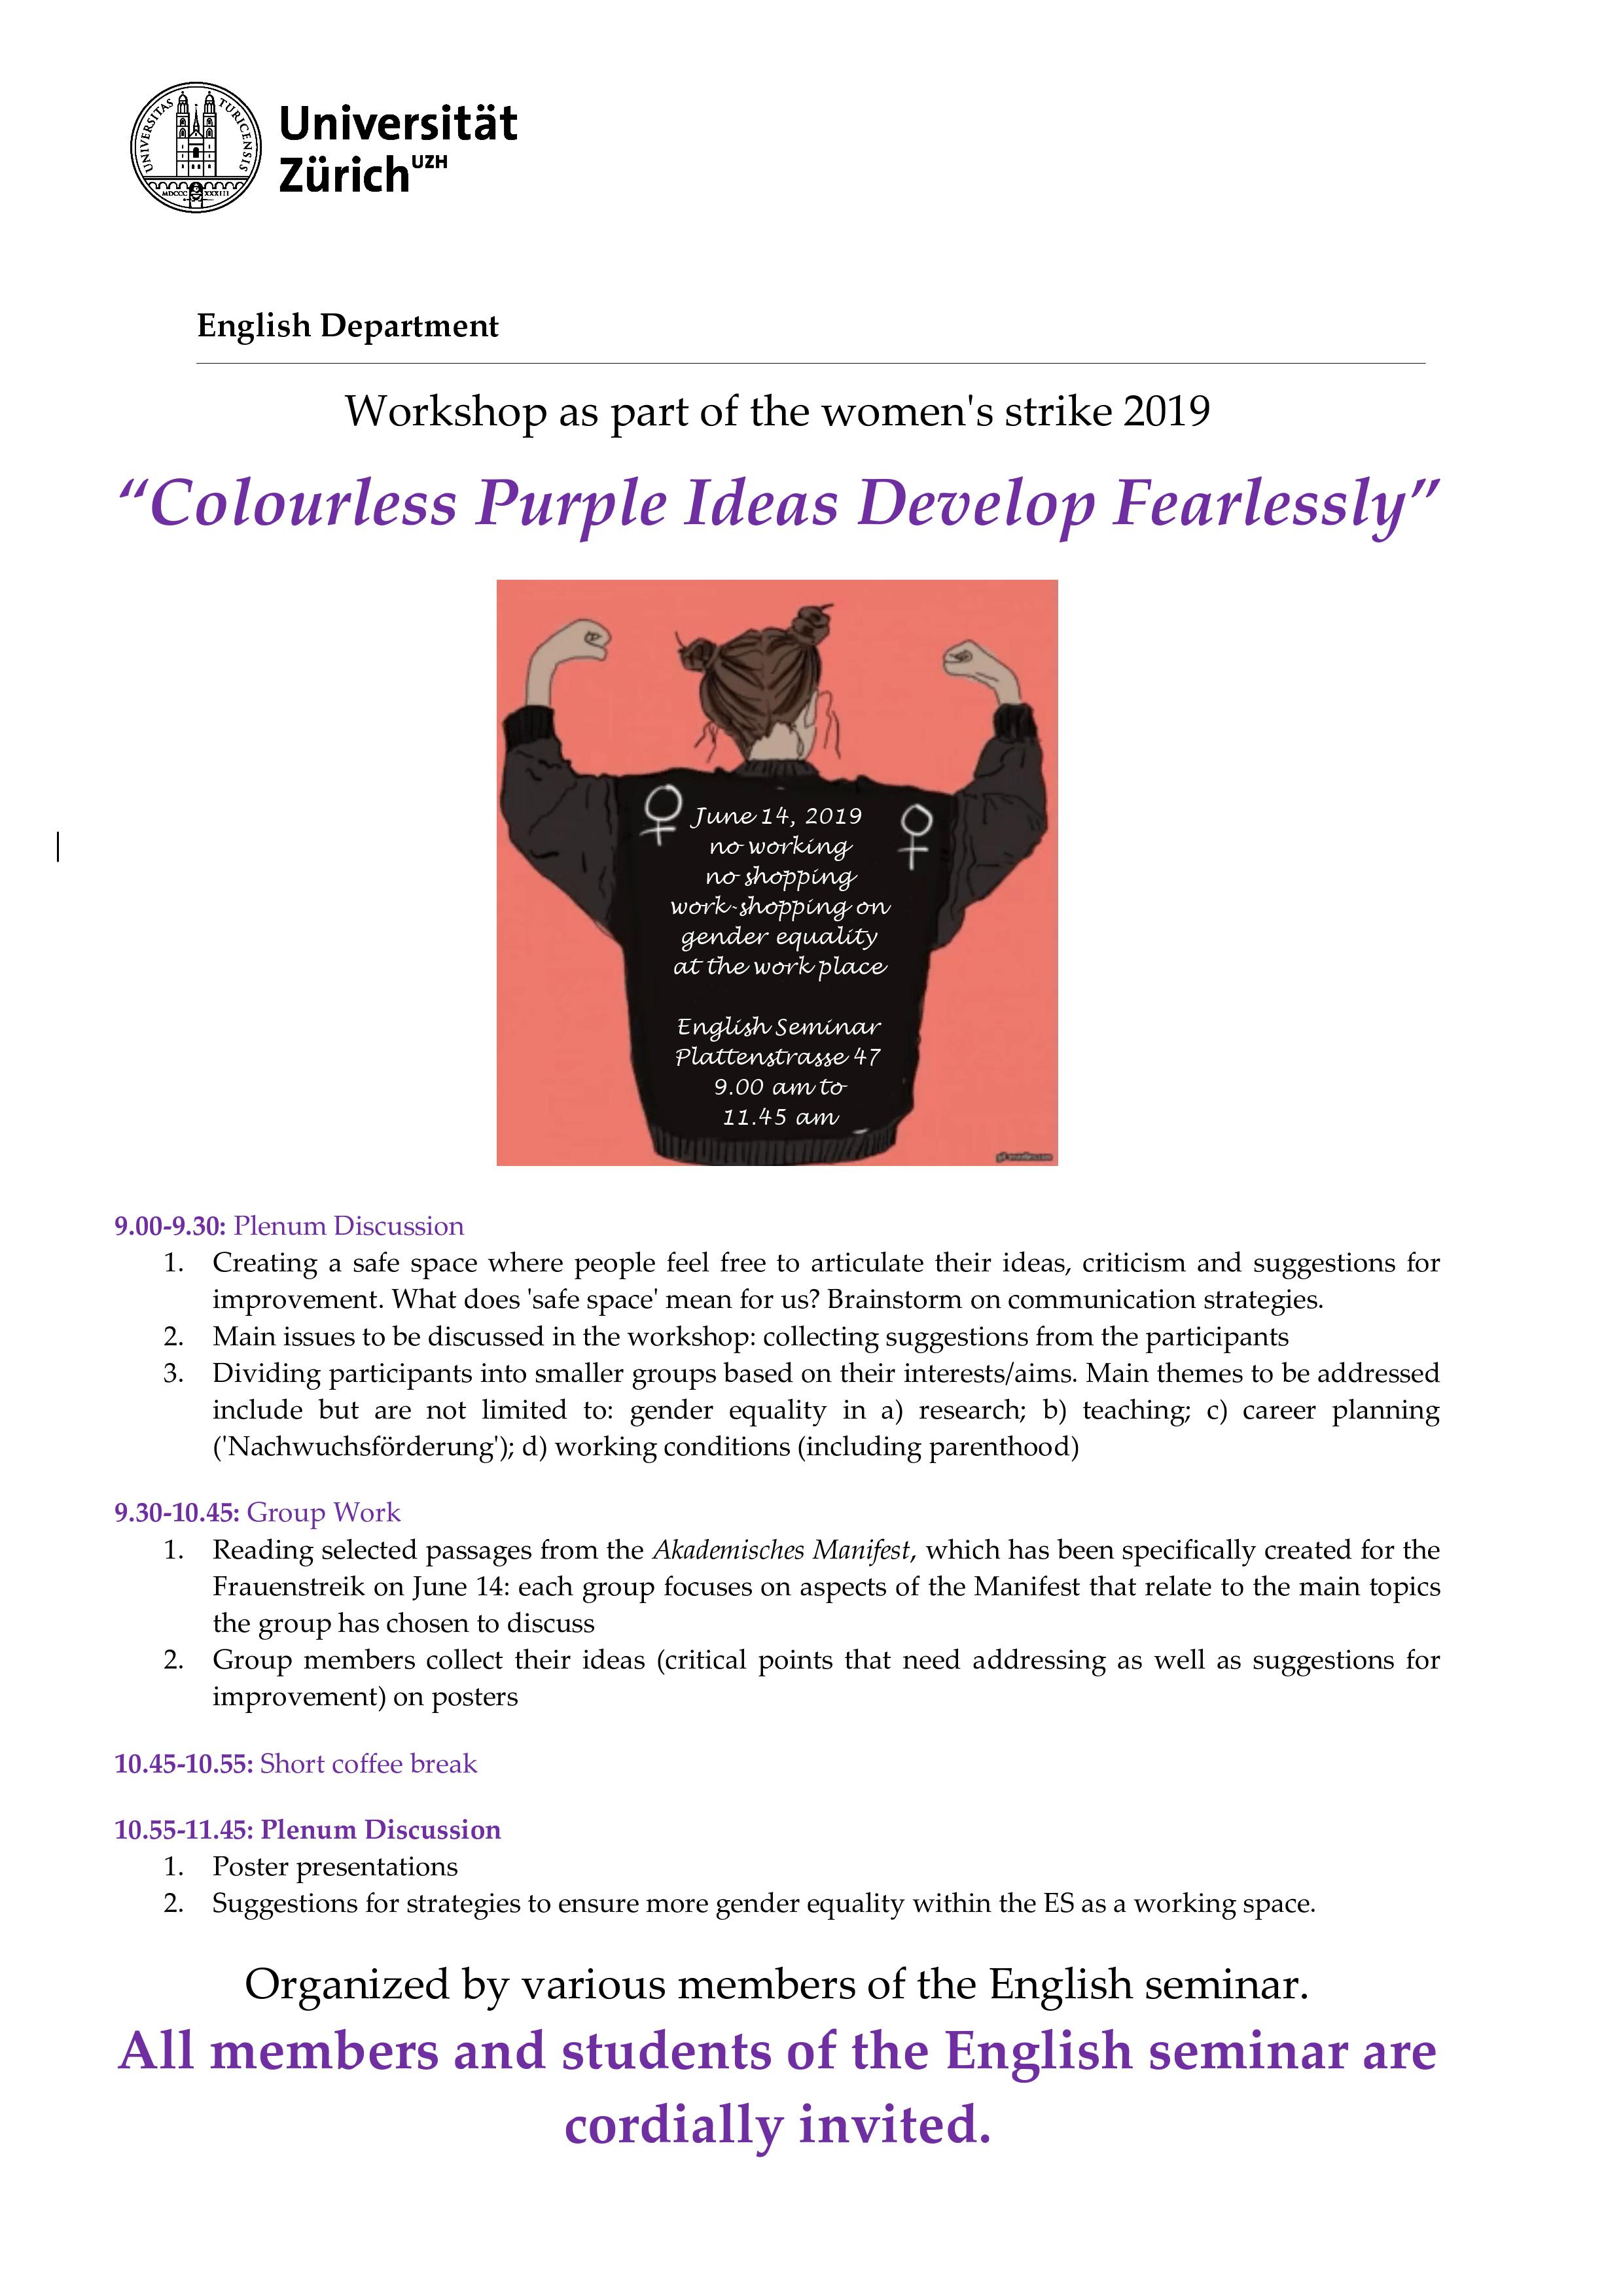 Workshop “Colourless Purple Ideas Develop Fearlessly”